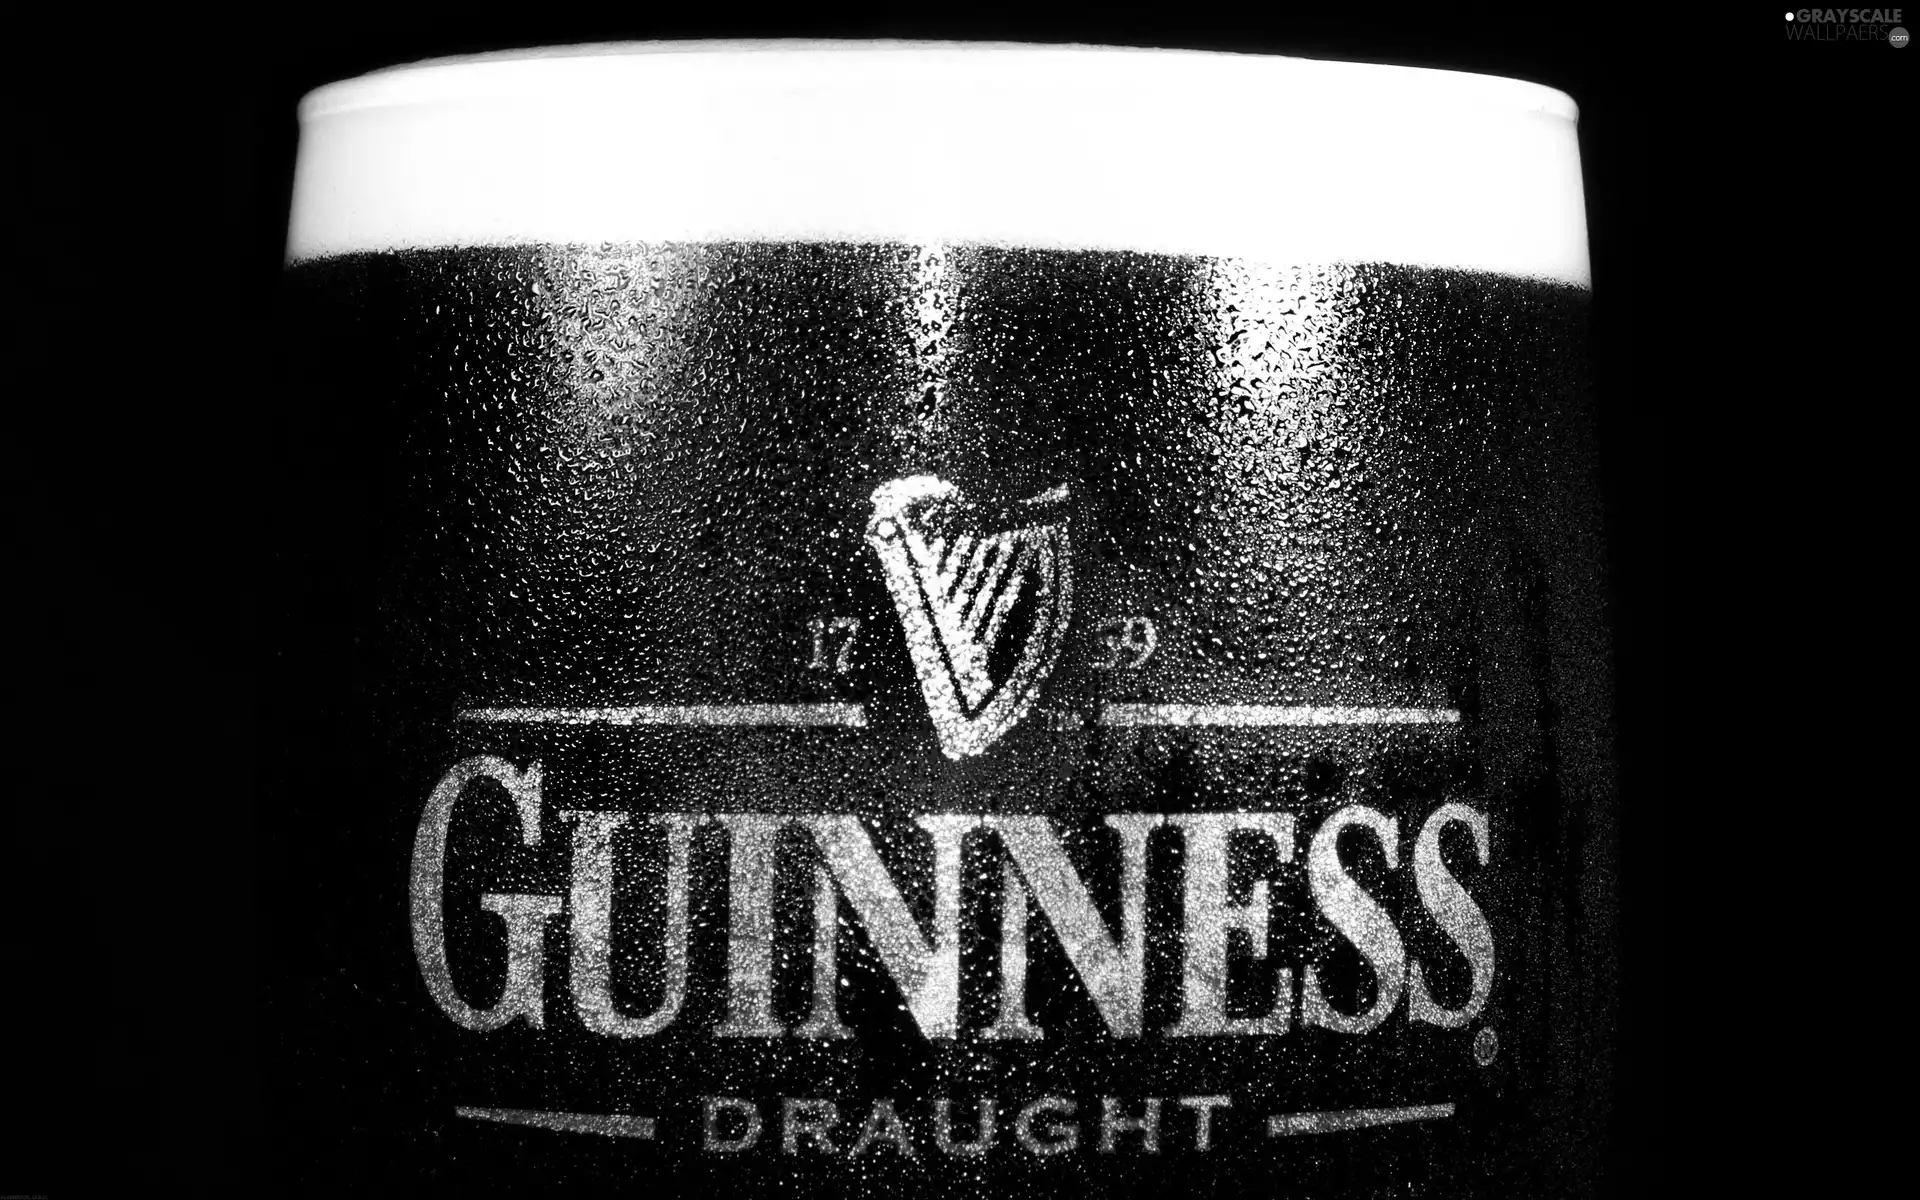 mug, beer, Guinness, dark